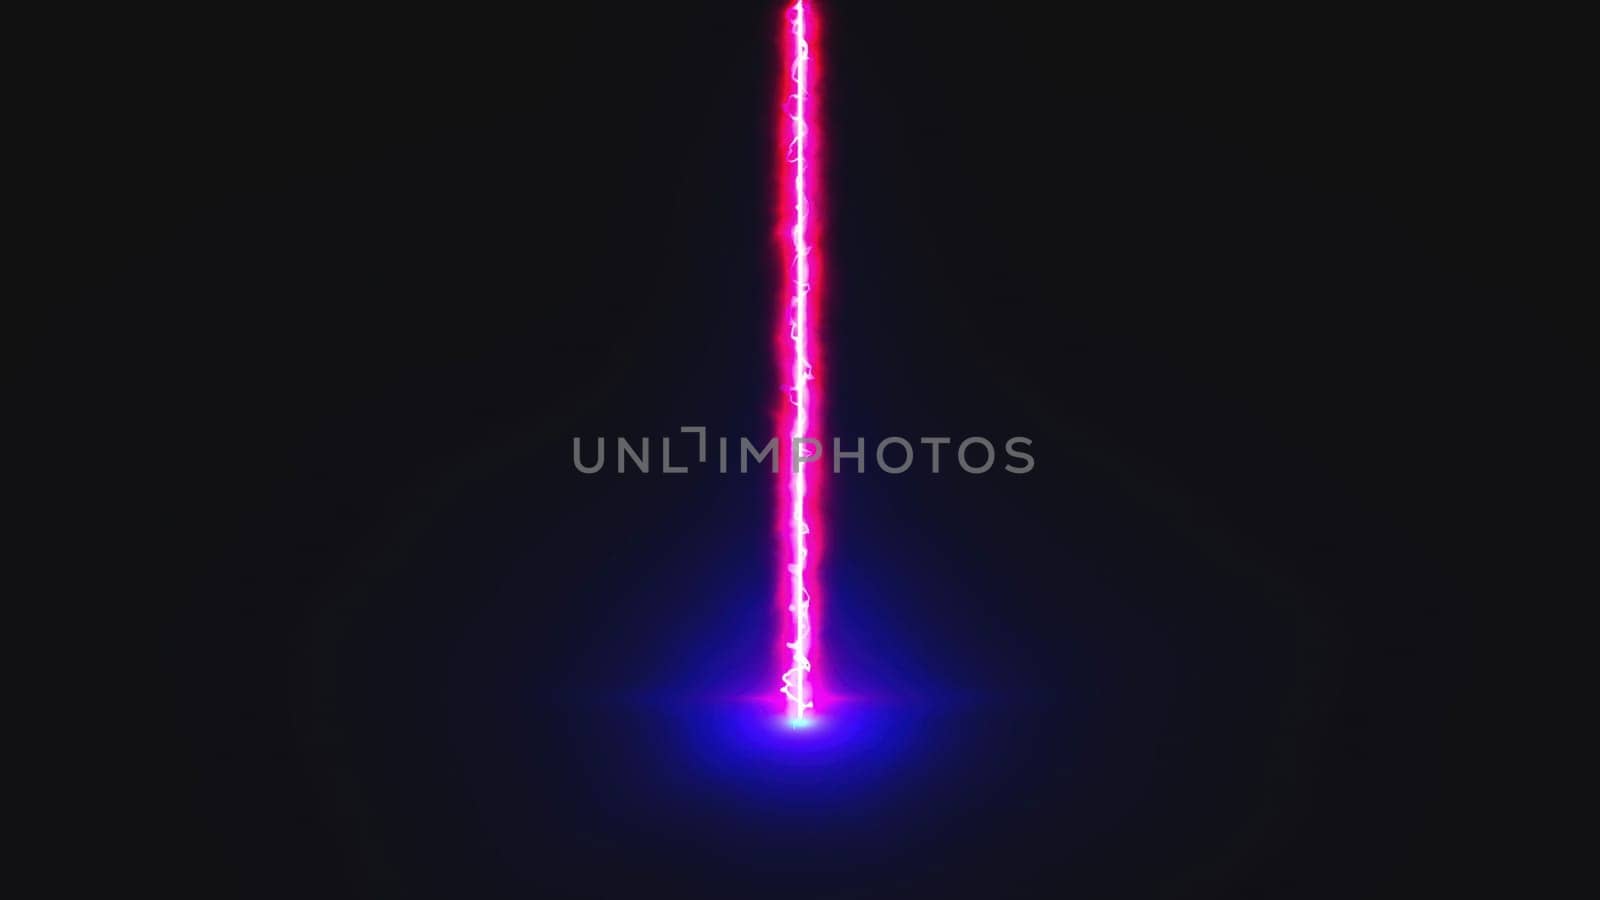 Bright laser beam. Computer generated 3d render